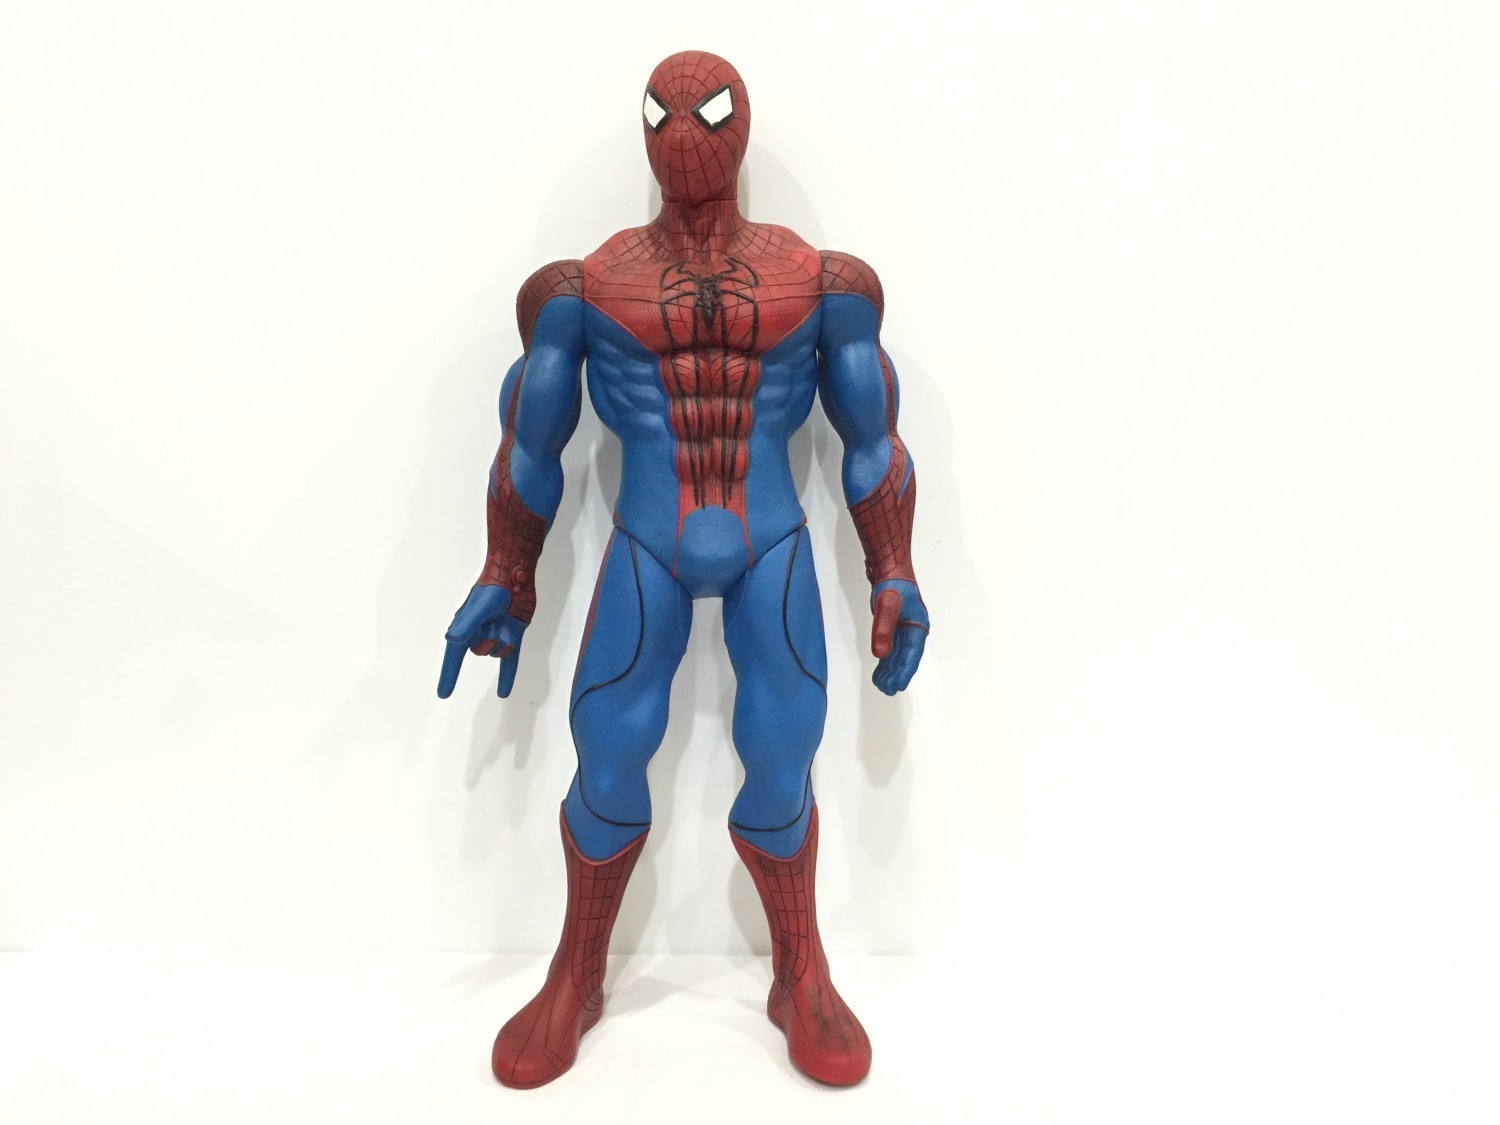 Spiderman Action Figure 12" Tall - SpiDerman Large 4495 1007